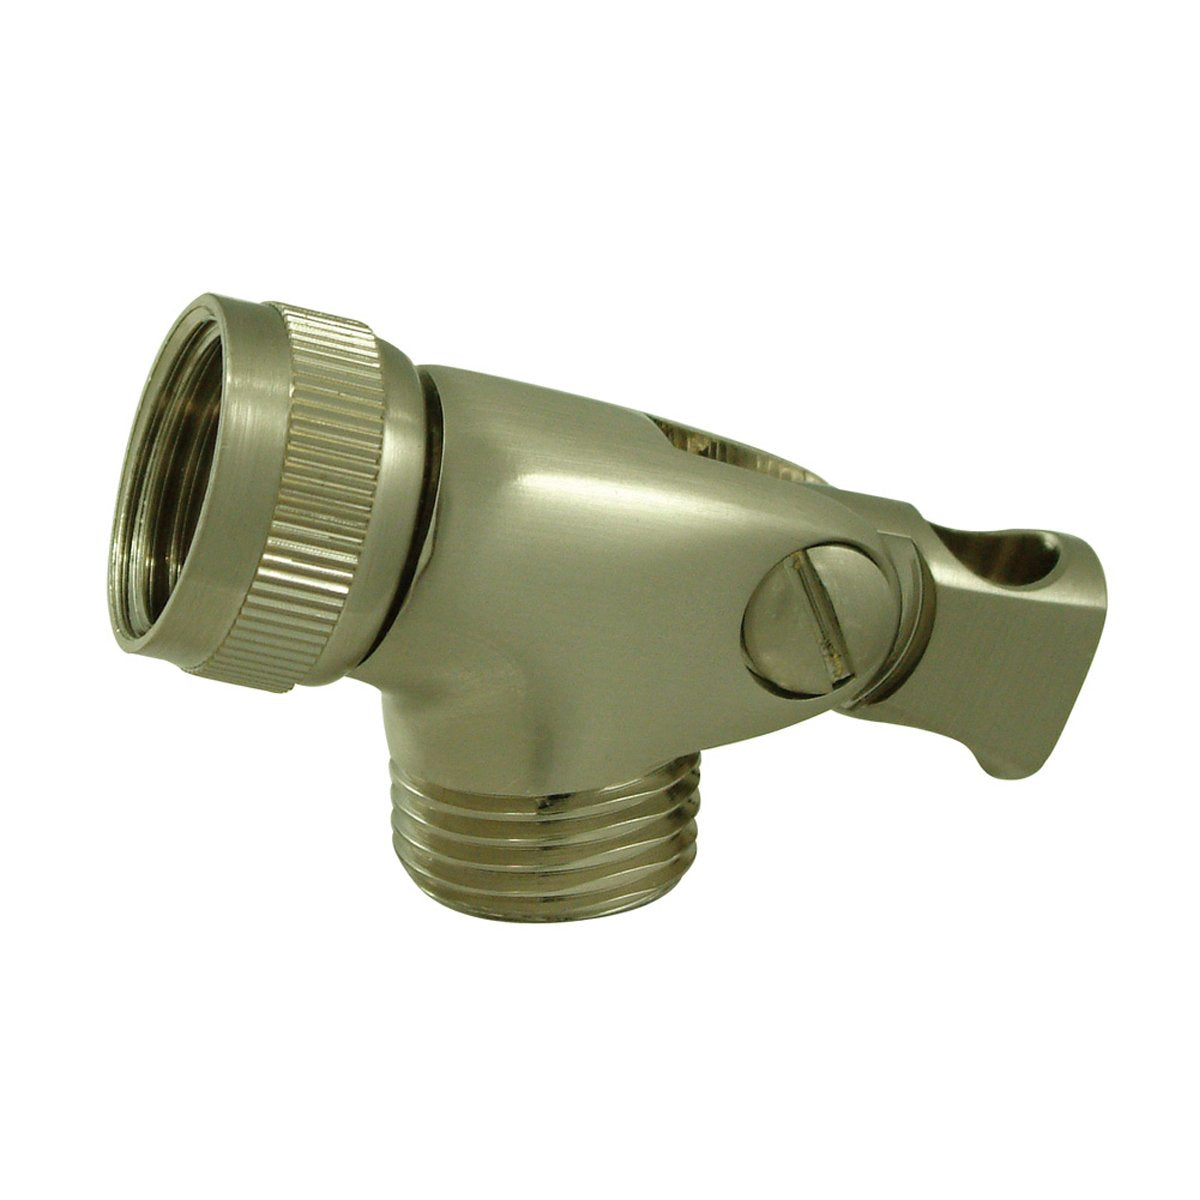 Kingston Brass Plumbing Parts Swivel Connector in Satin Nickel-Bathroom Accessories-Free Shipping-Directsinks.